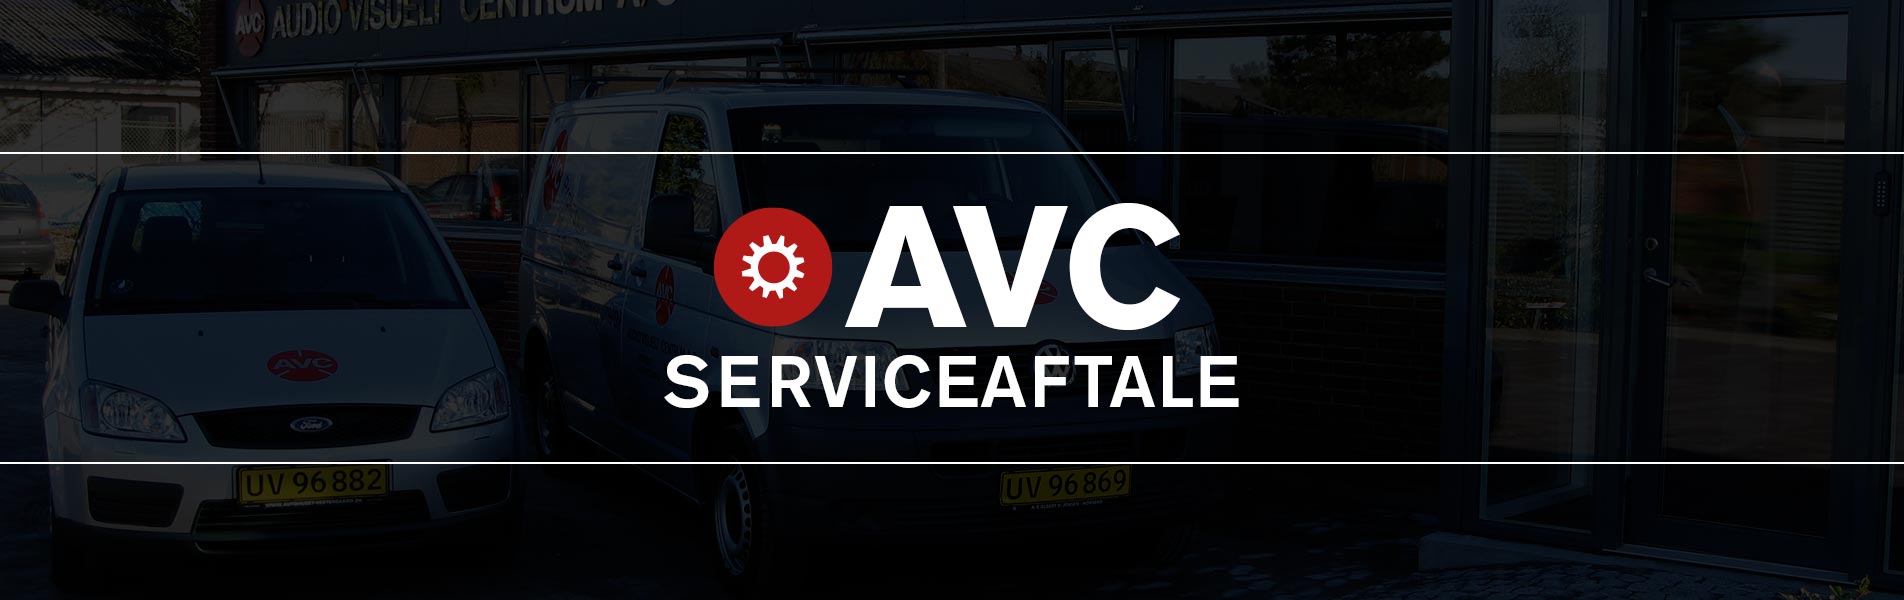 AVC Service & Supportaftale